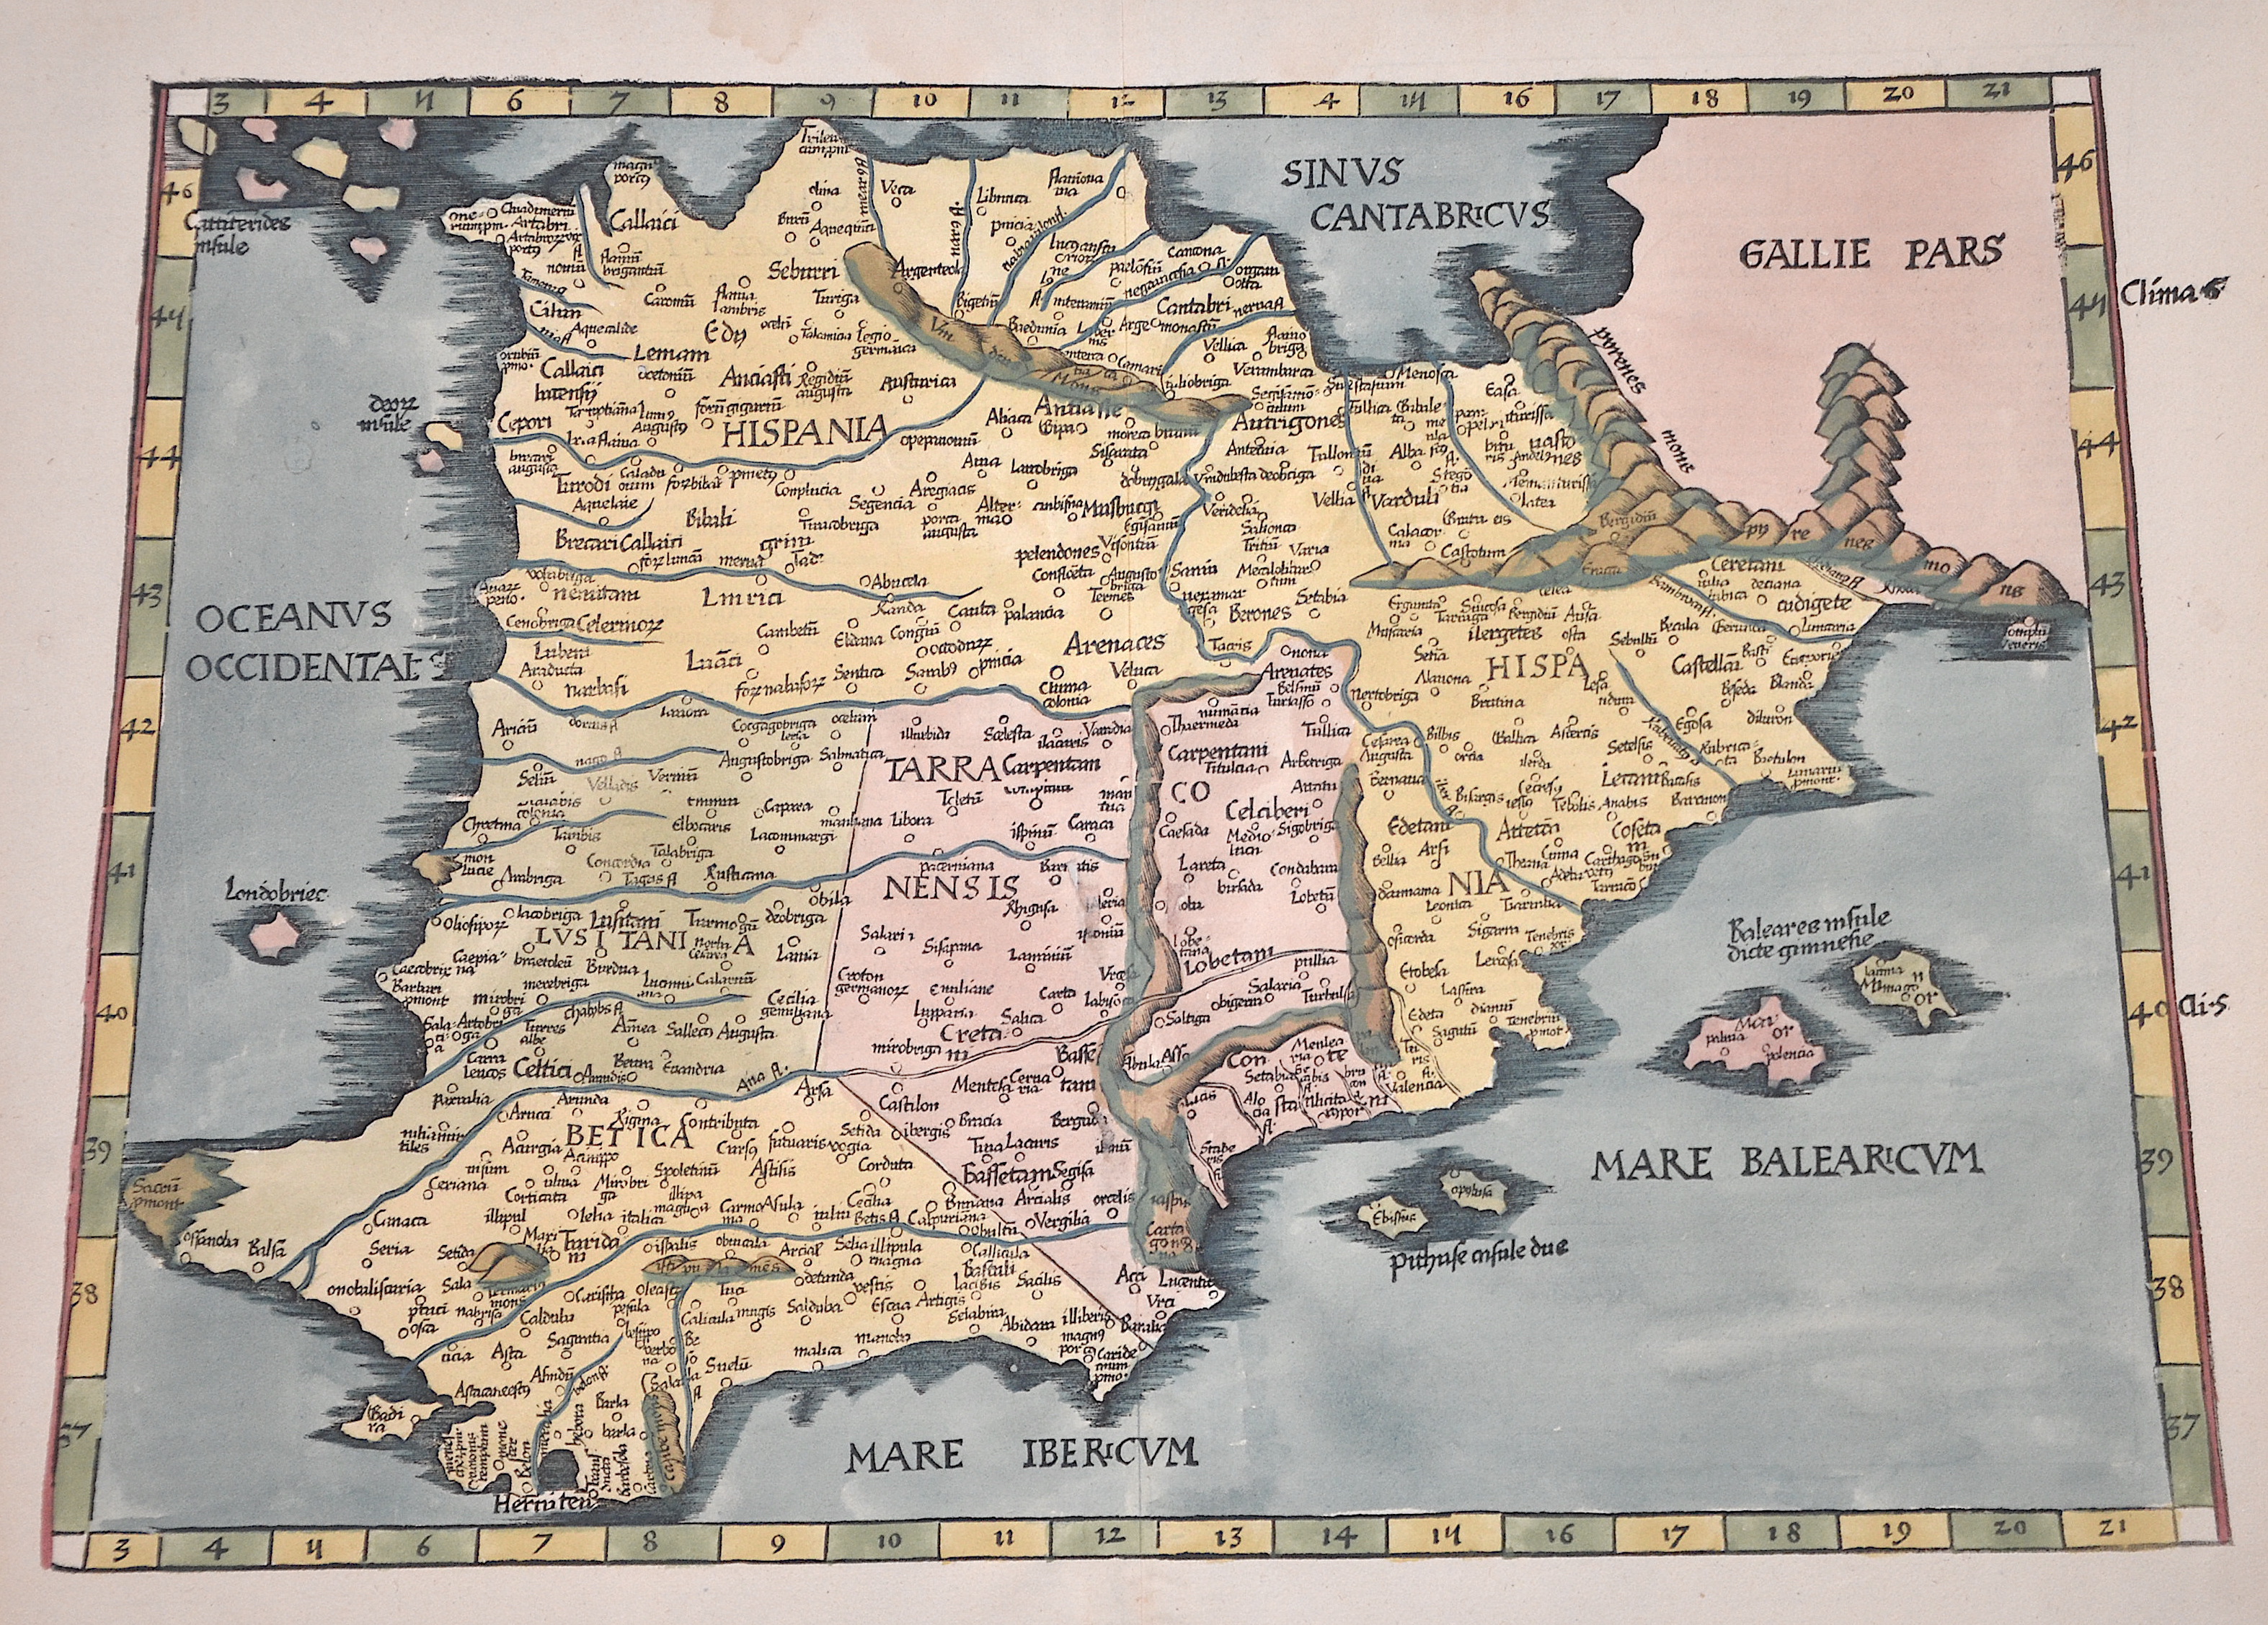 Ptolemy/Waldseemüller- Johann Schott  Europae tabula secunda continet Hispaniam…